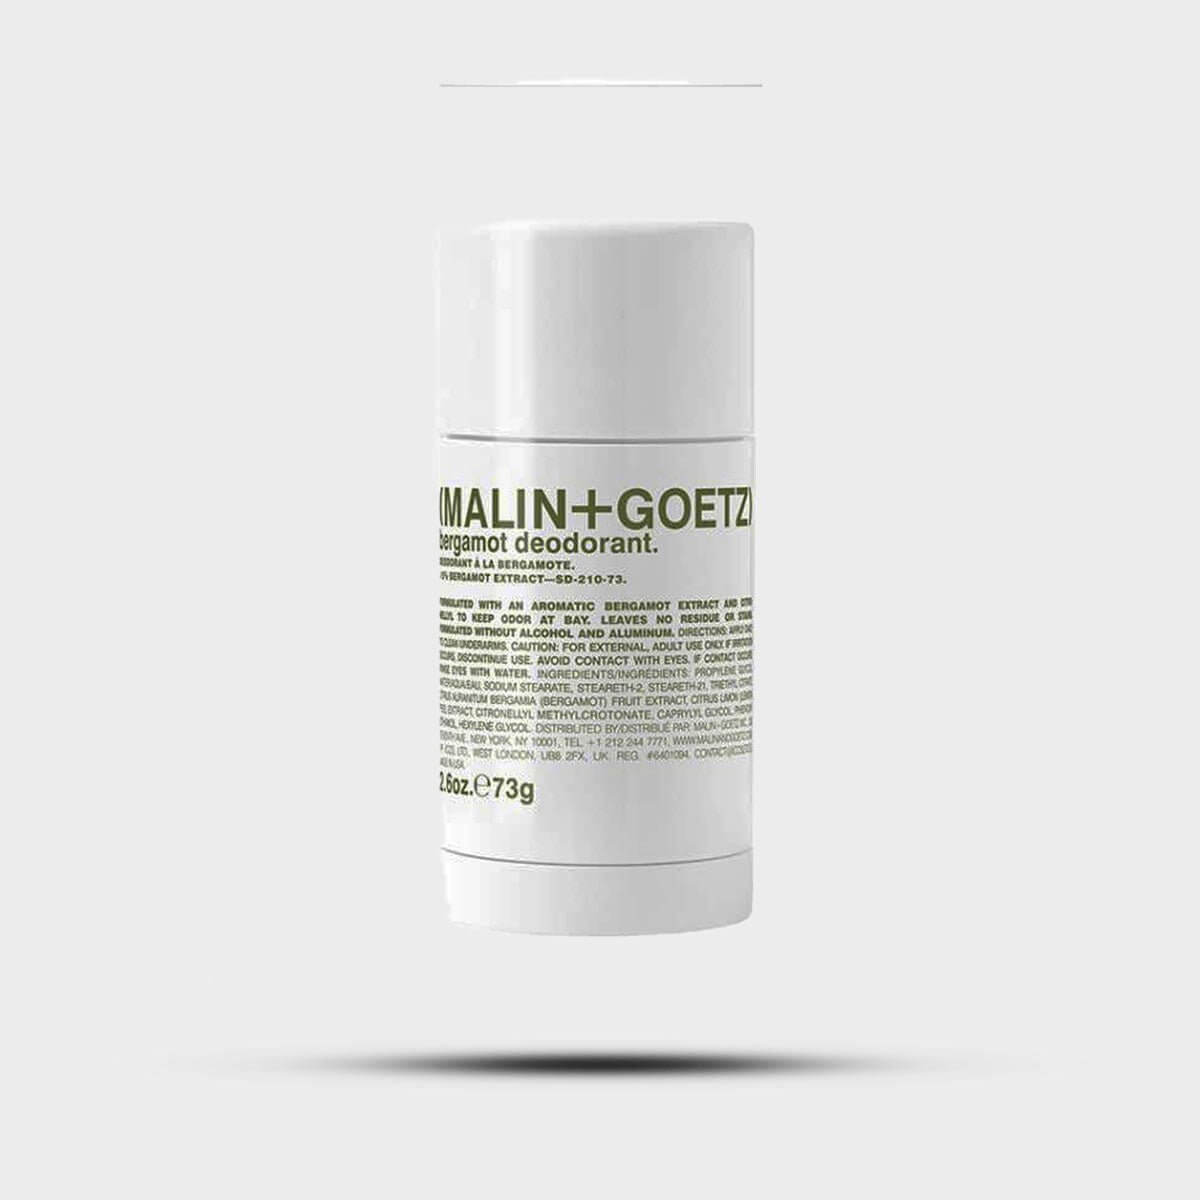 anspore taske Hane Bergamot Deodorant deodorant by Malin + Goetz,size 73g, - La Maison Du  Parfum